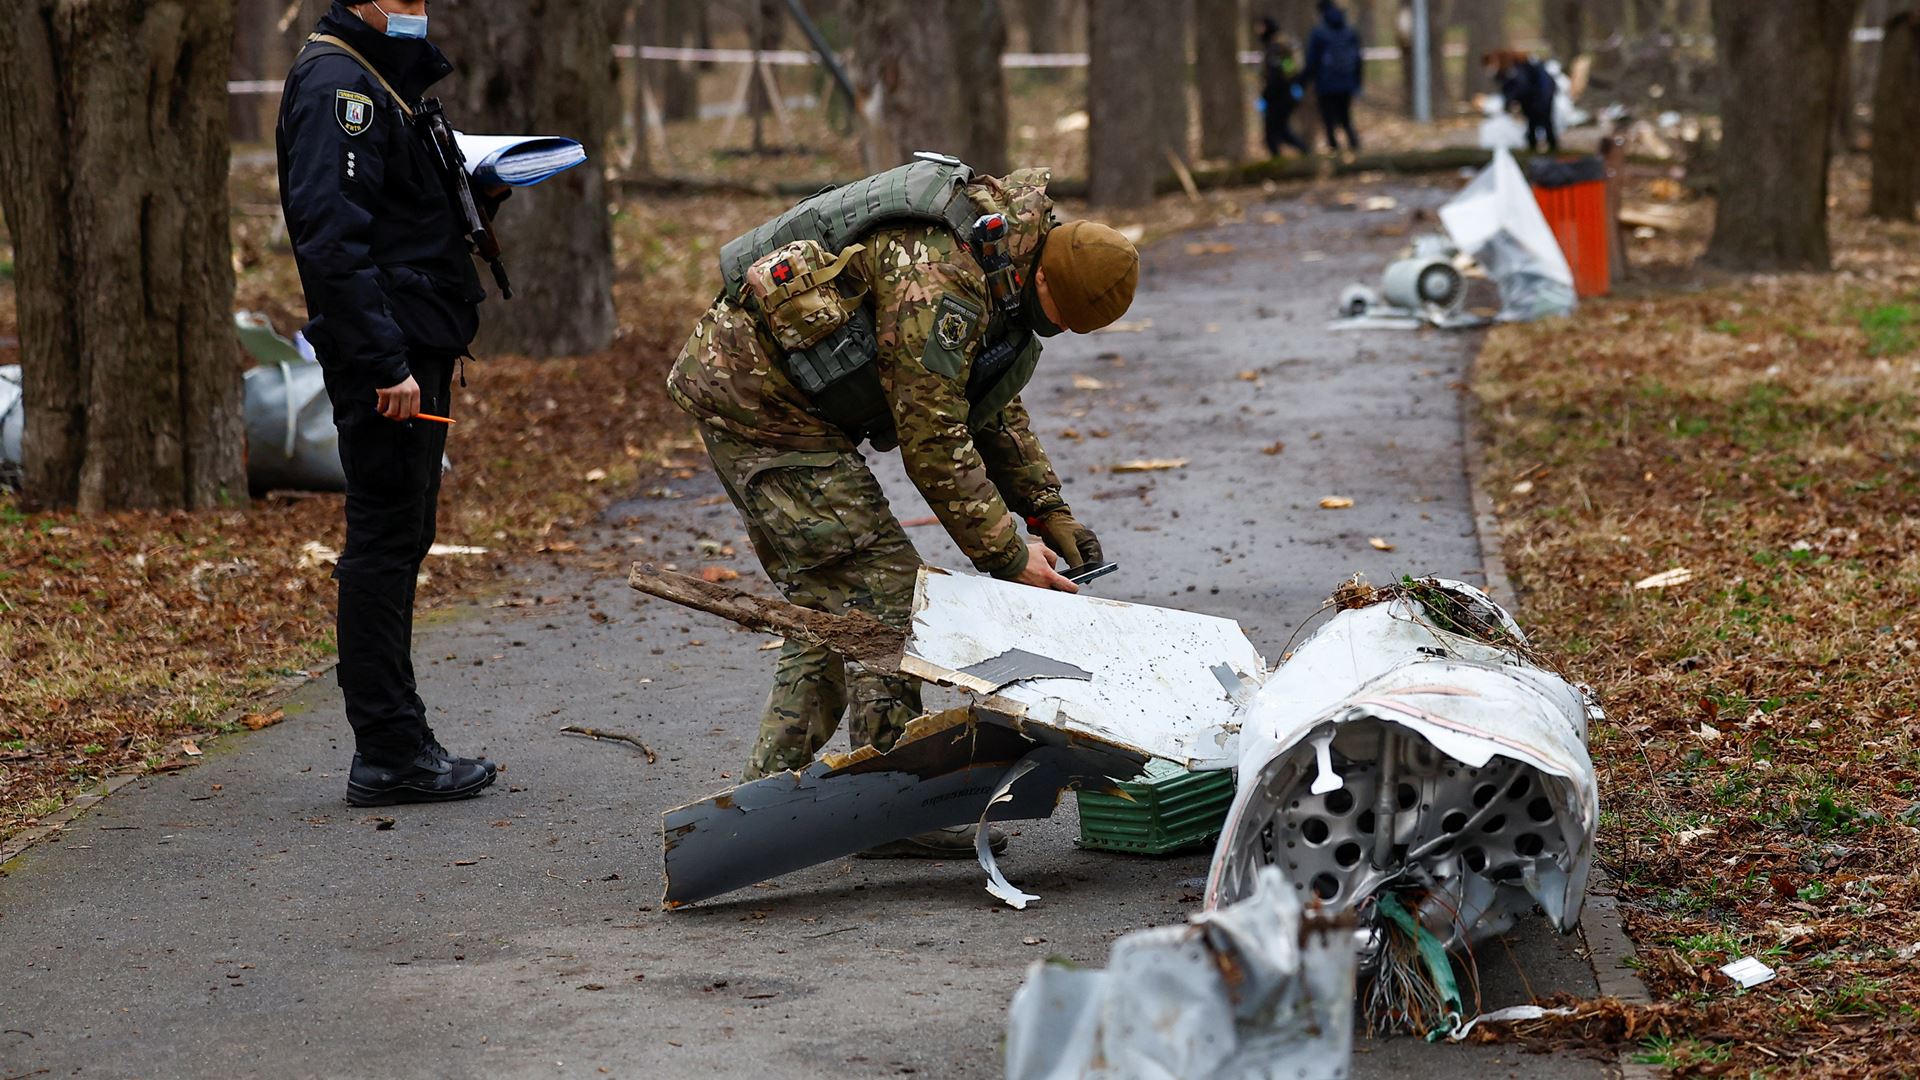 guerra.-ucrania-mobiliza-menos-soldados-do-que-inicialmente-previsto